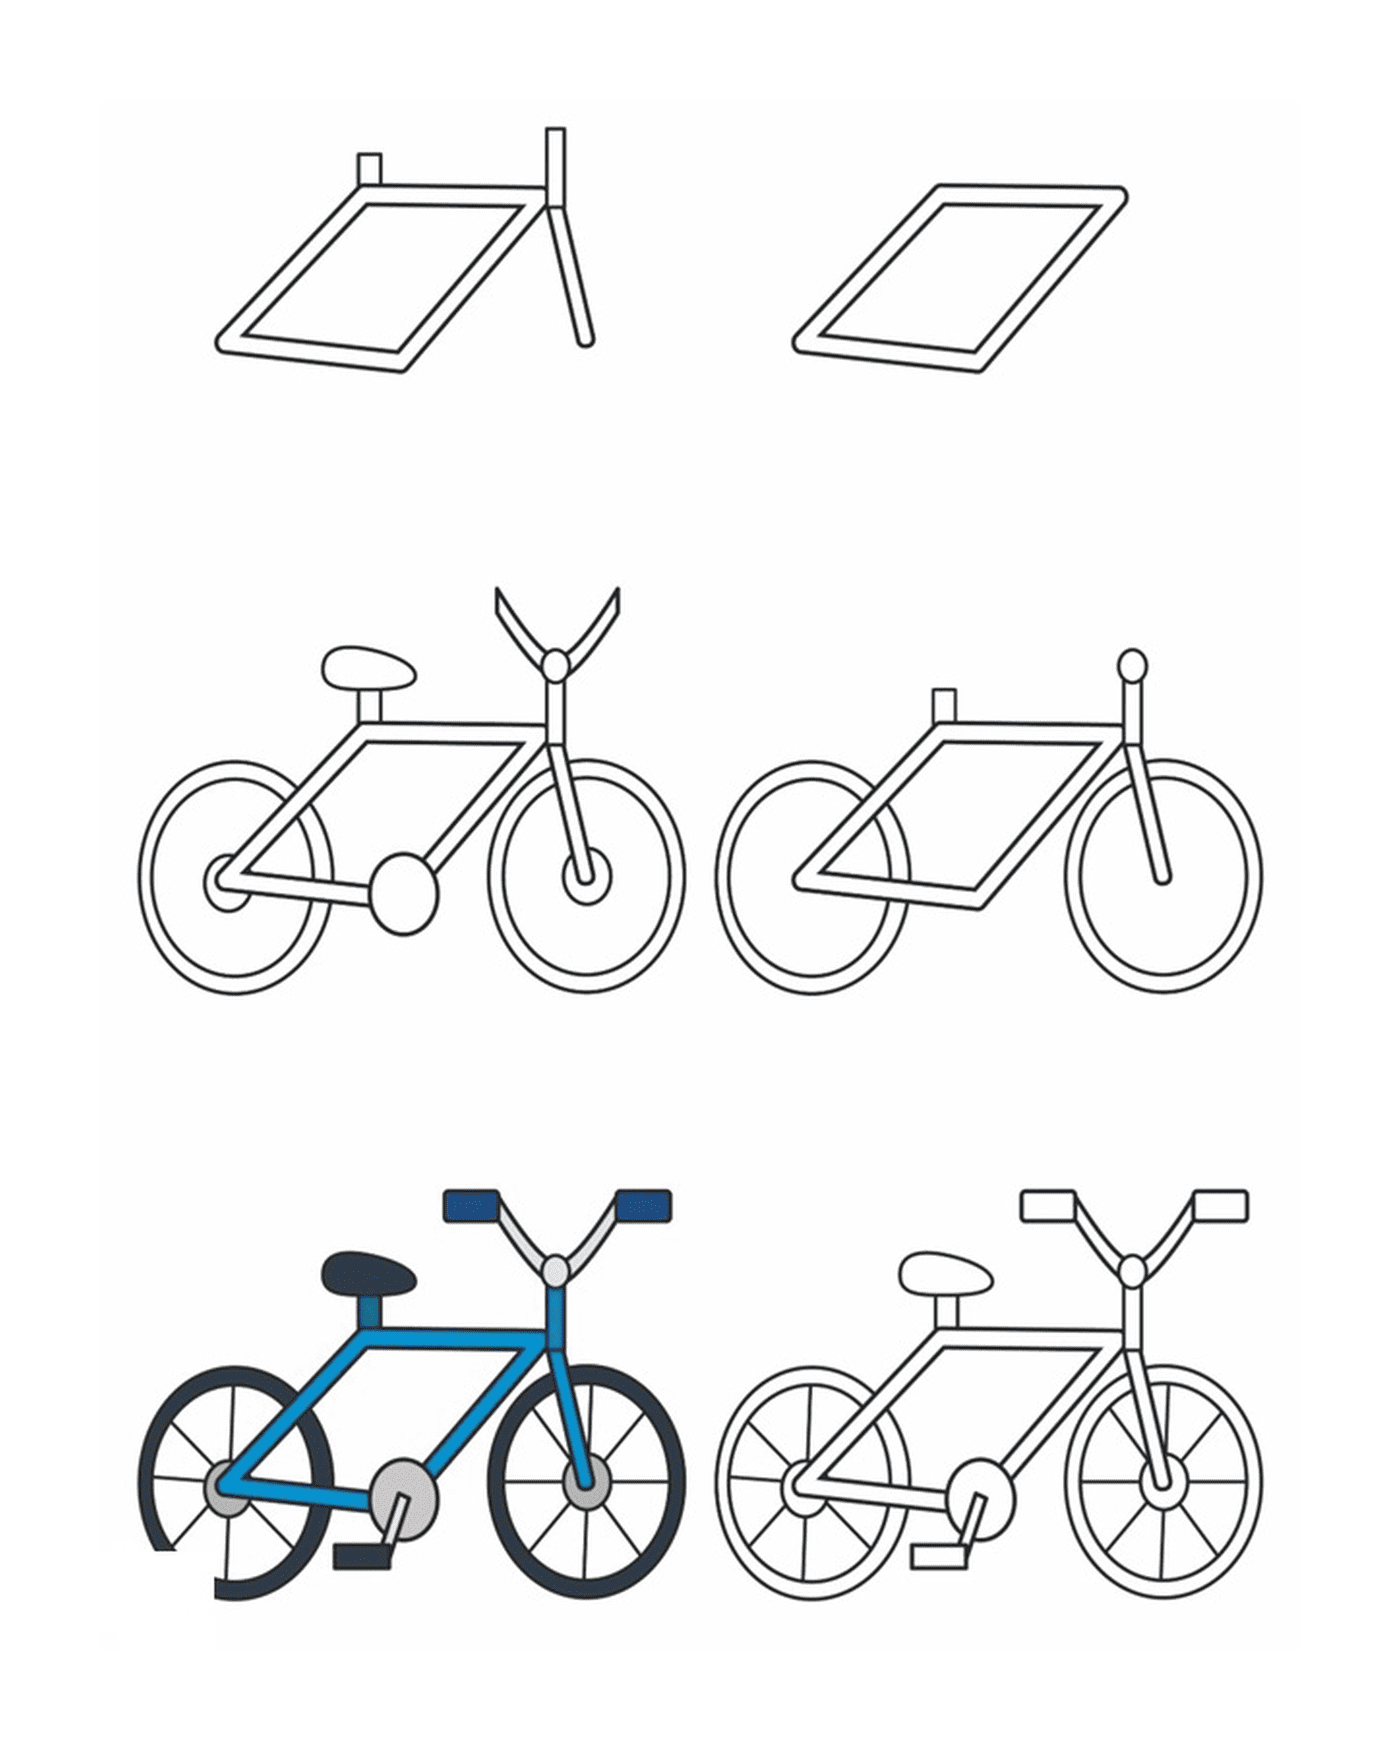  How to draw a bike 